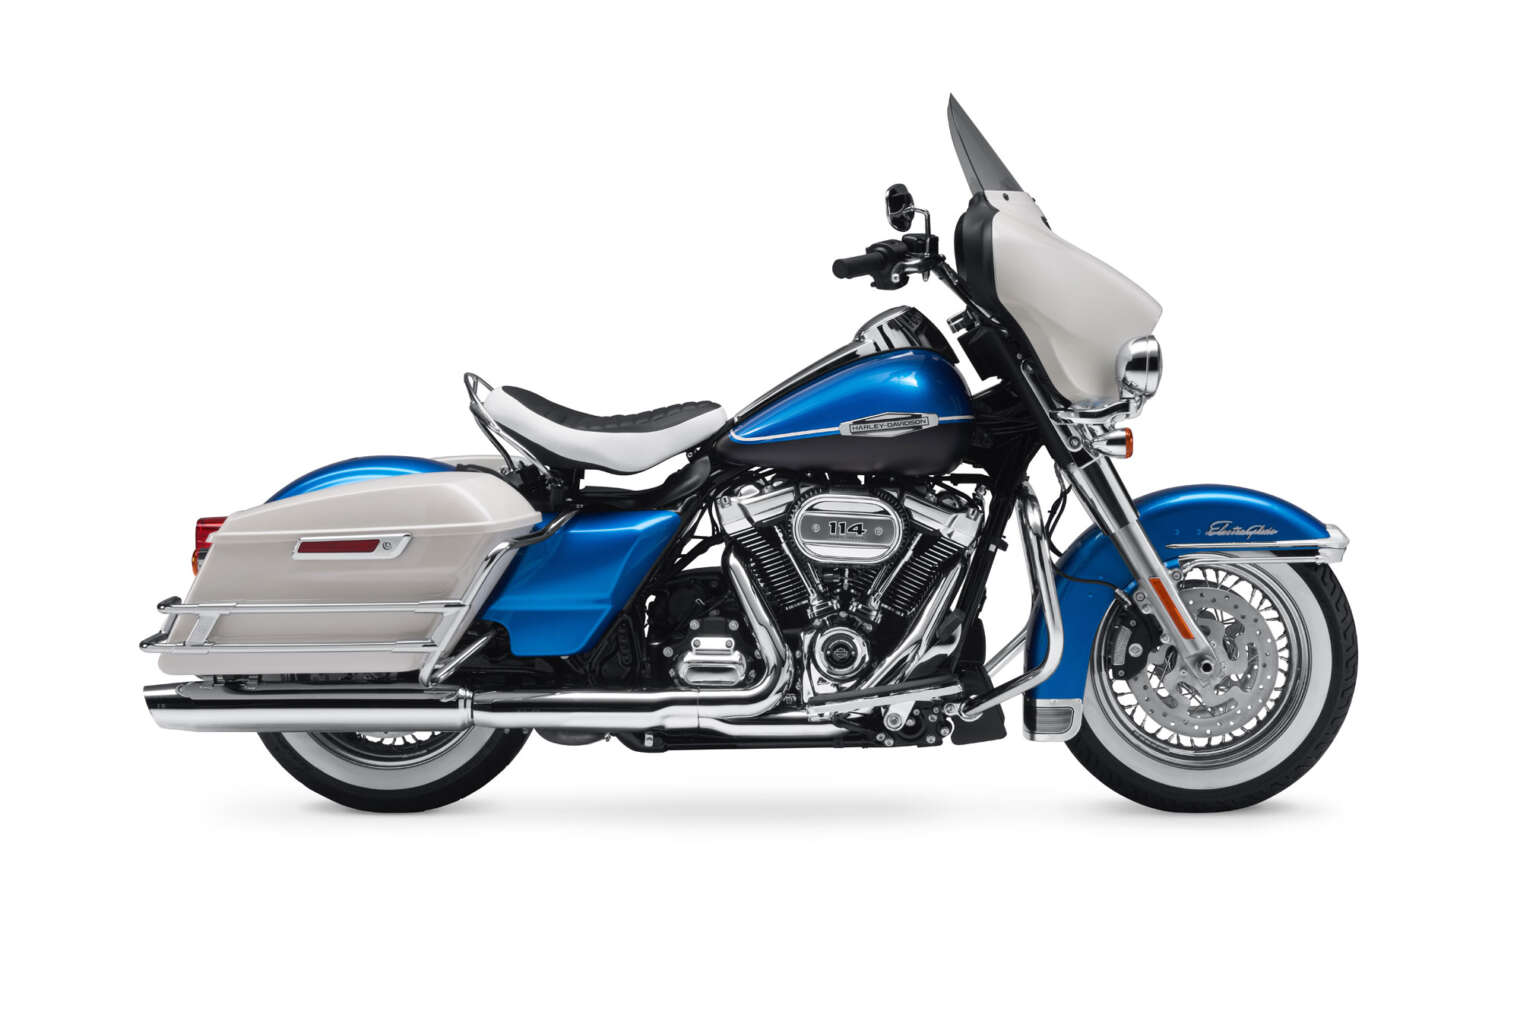 2021 Harley-Davidson Electra Glide Revival Guide • Total Motorcycle